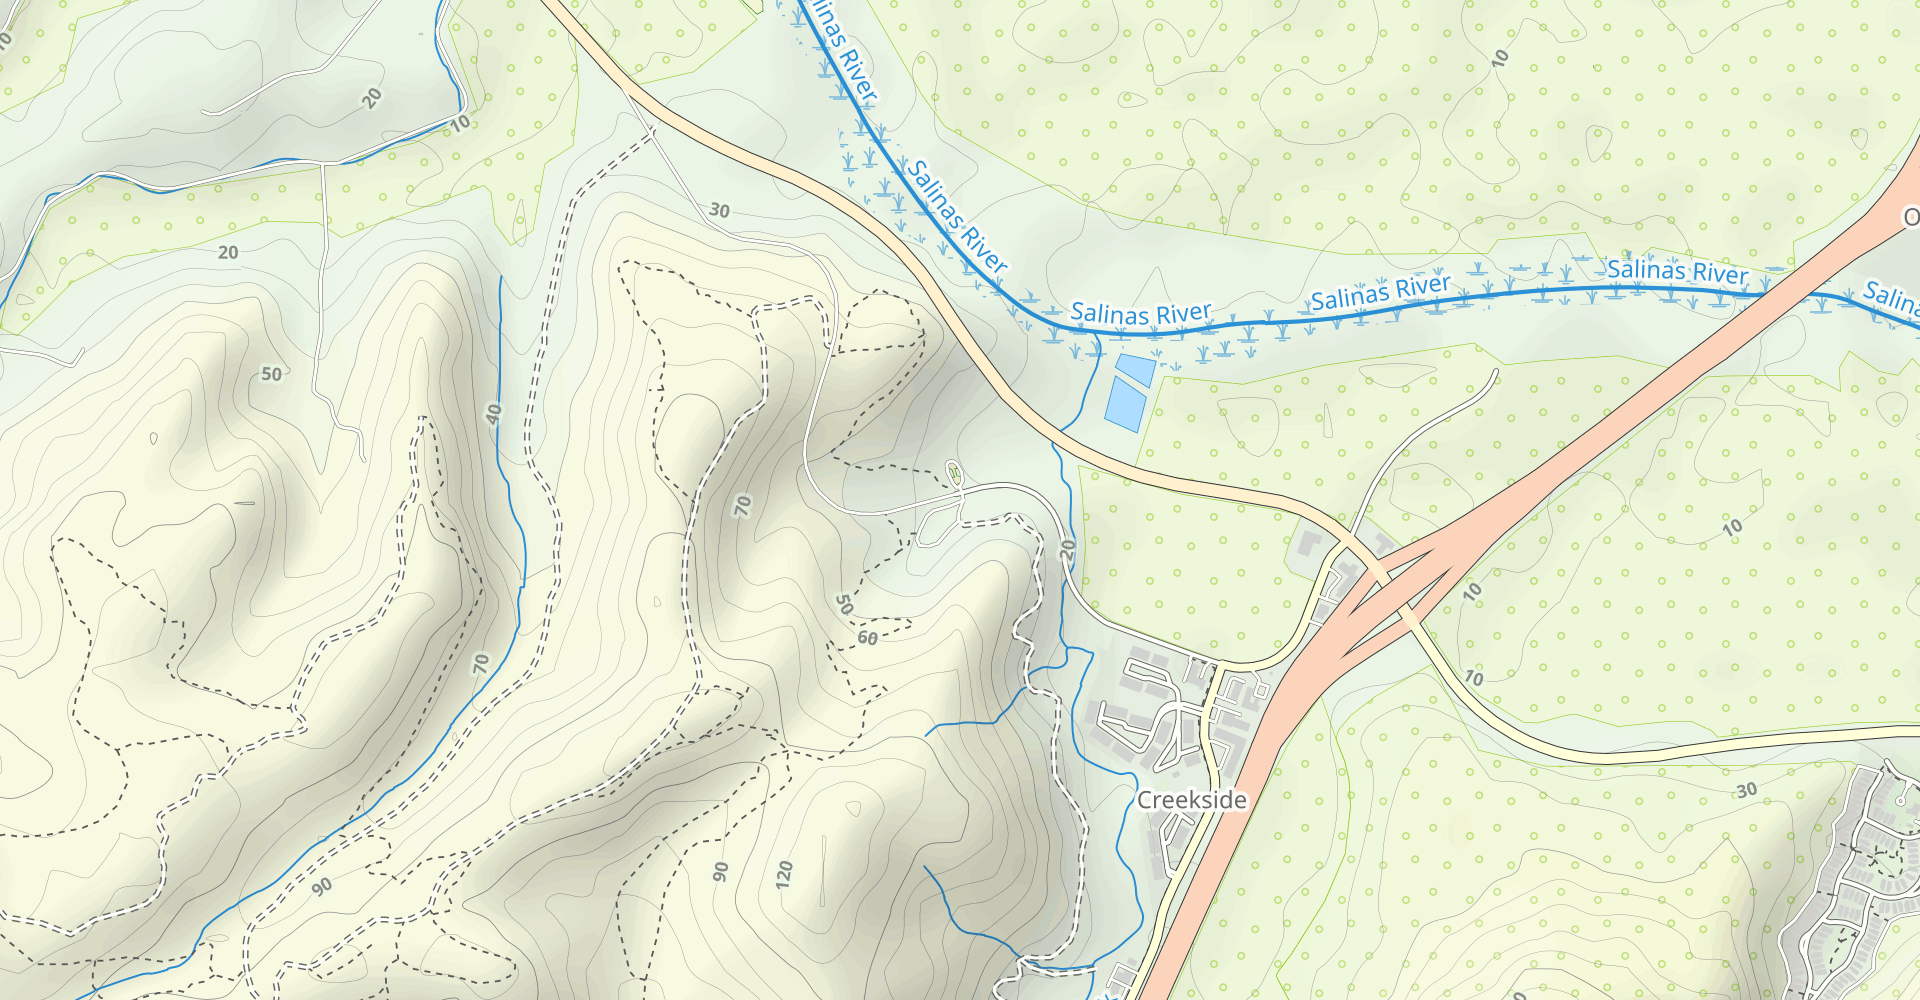 Trail 1, Trail 72, and Trail 31 Loop